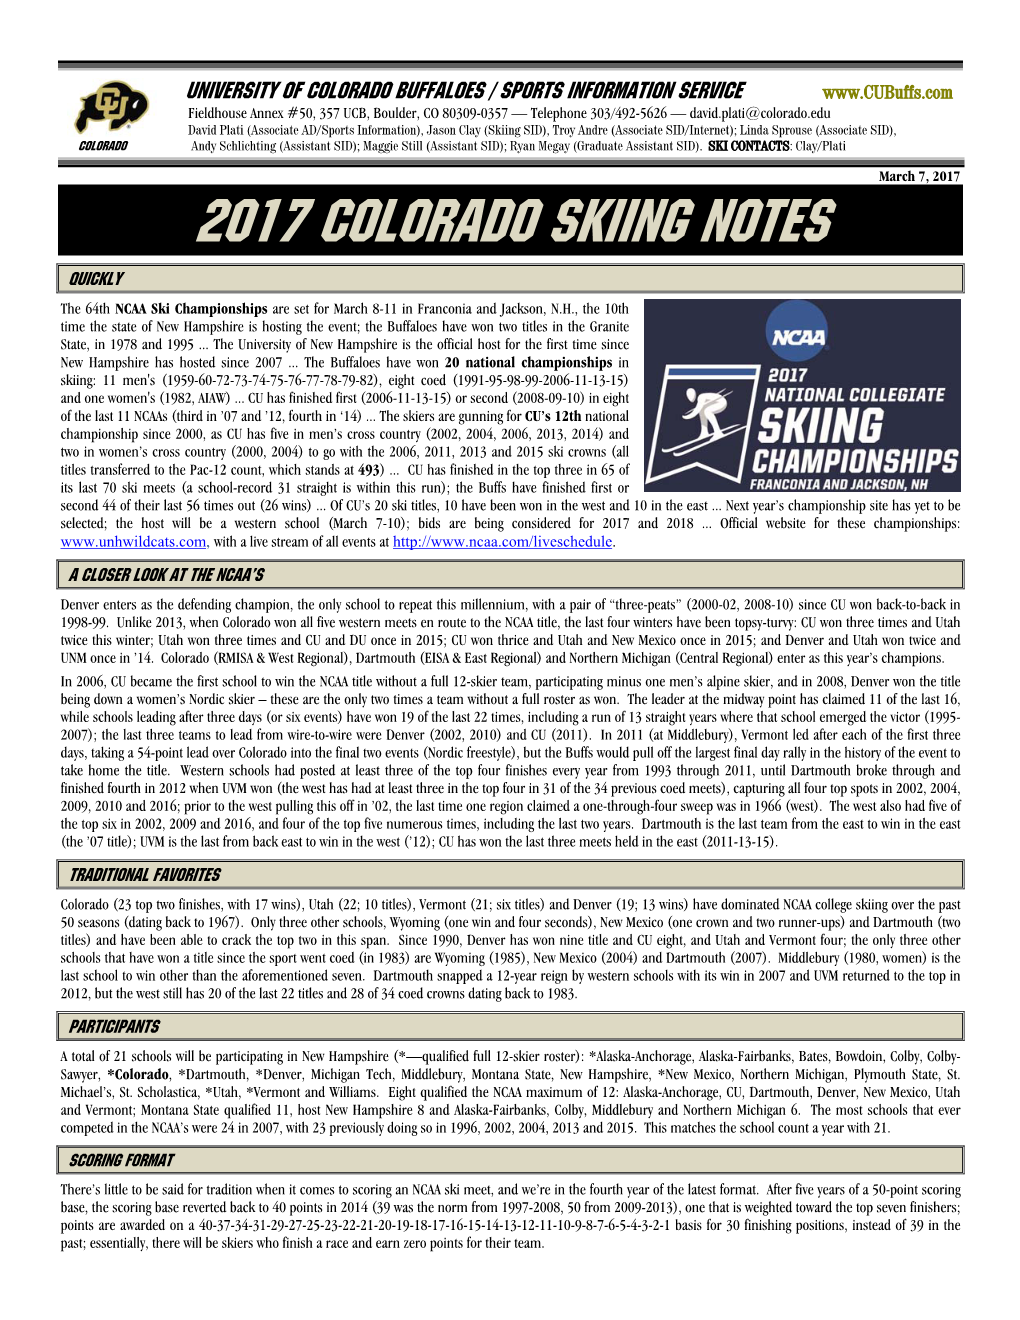 2017 Colorado Skiing Notes